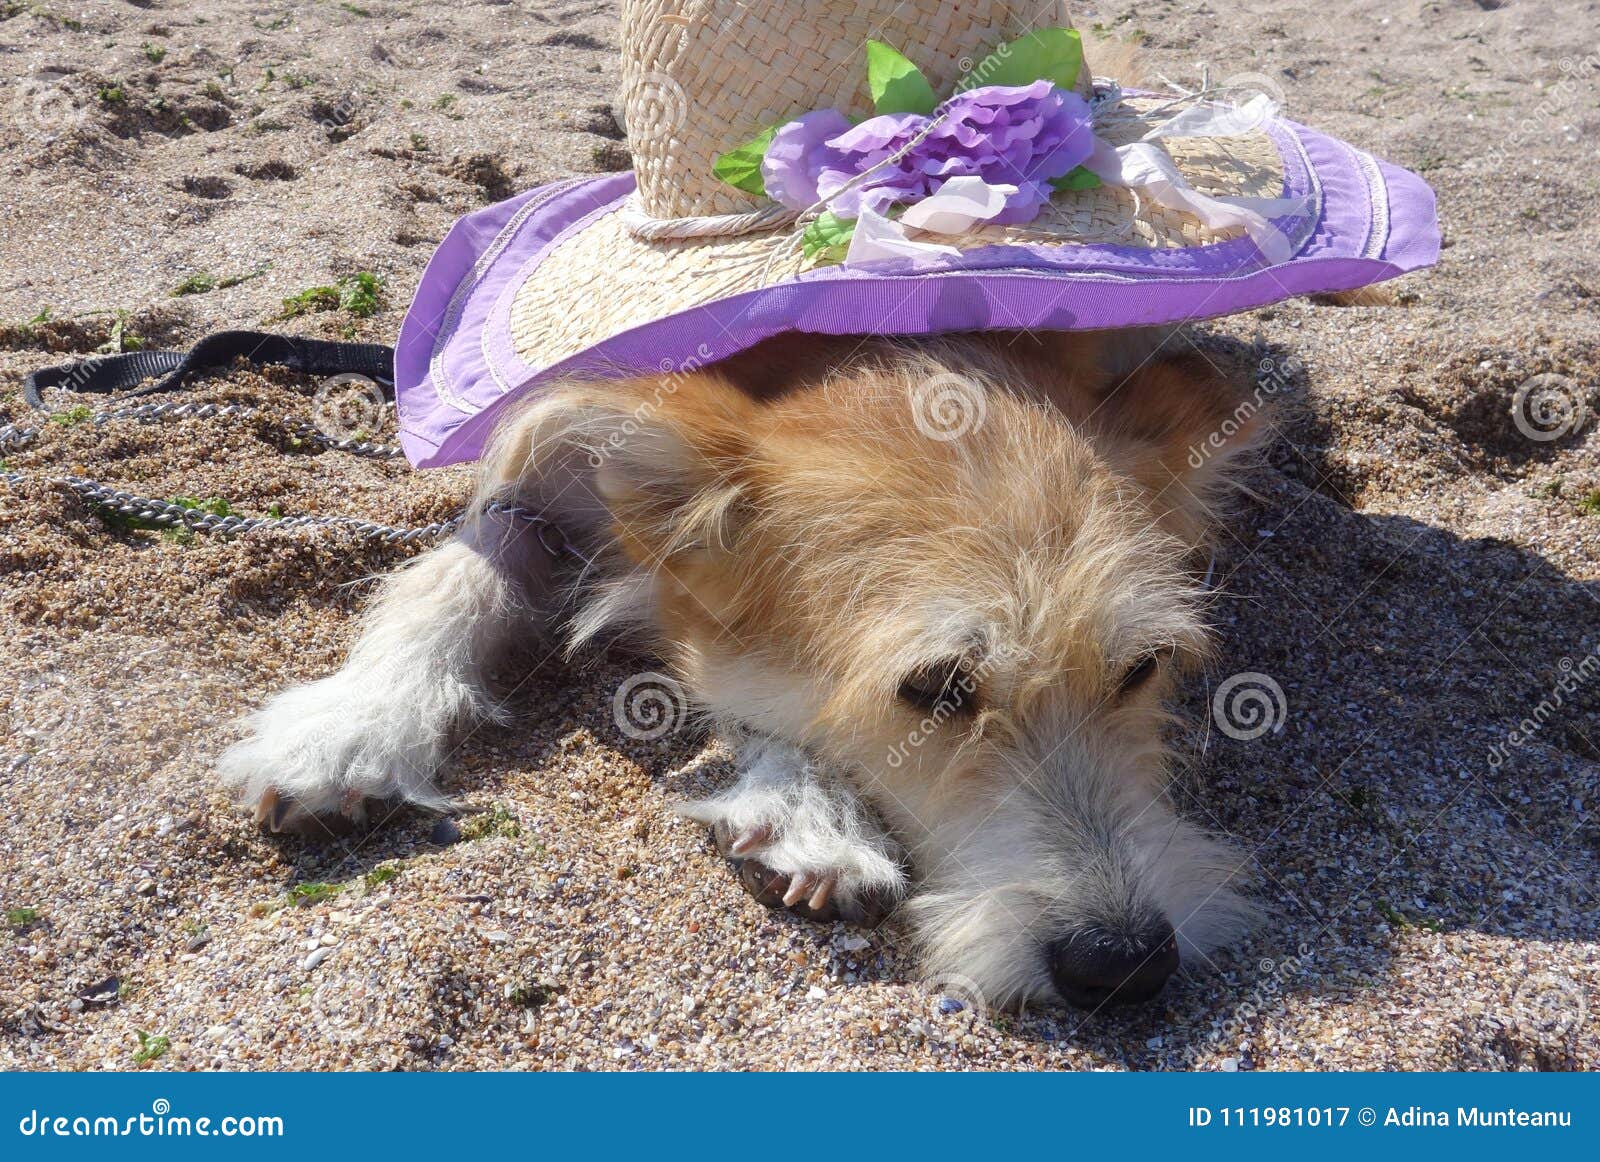 https://thumbs.dreamstime.com/z/dog-lying-beach-violet-straw-hat-his-back-sand-111981017.jpg